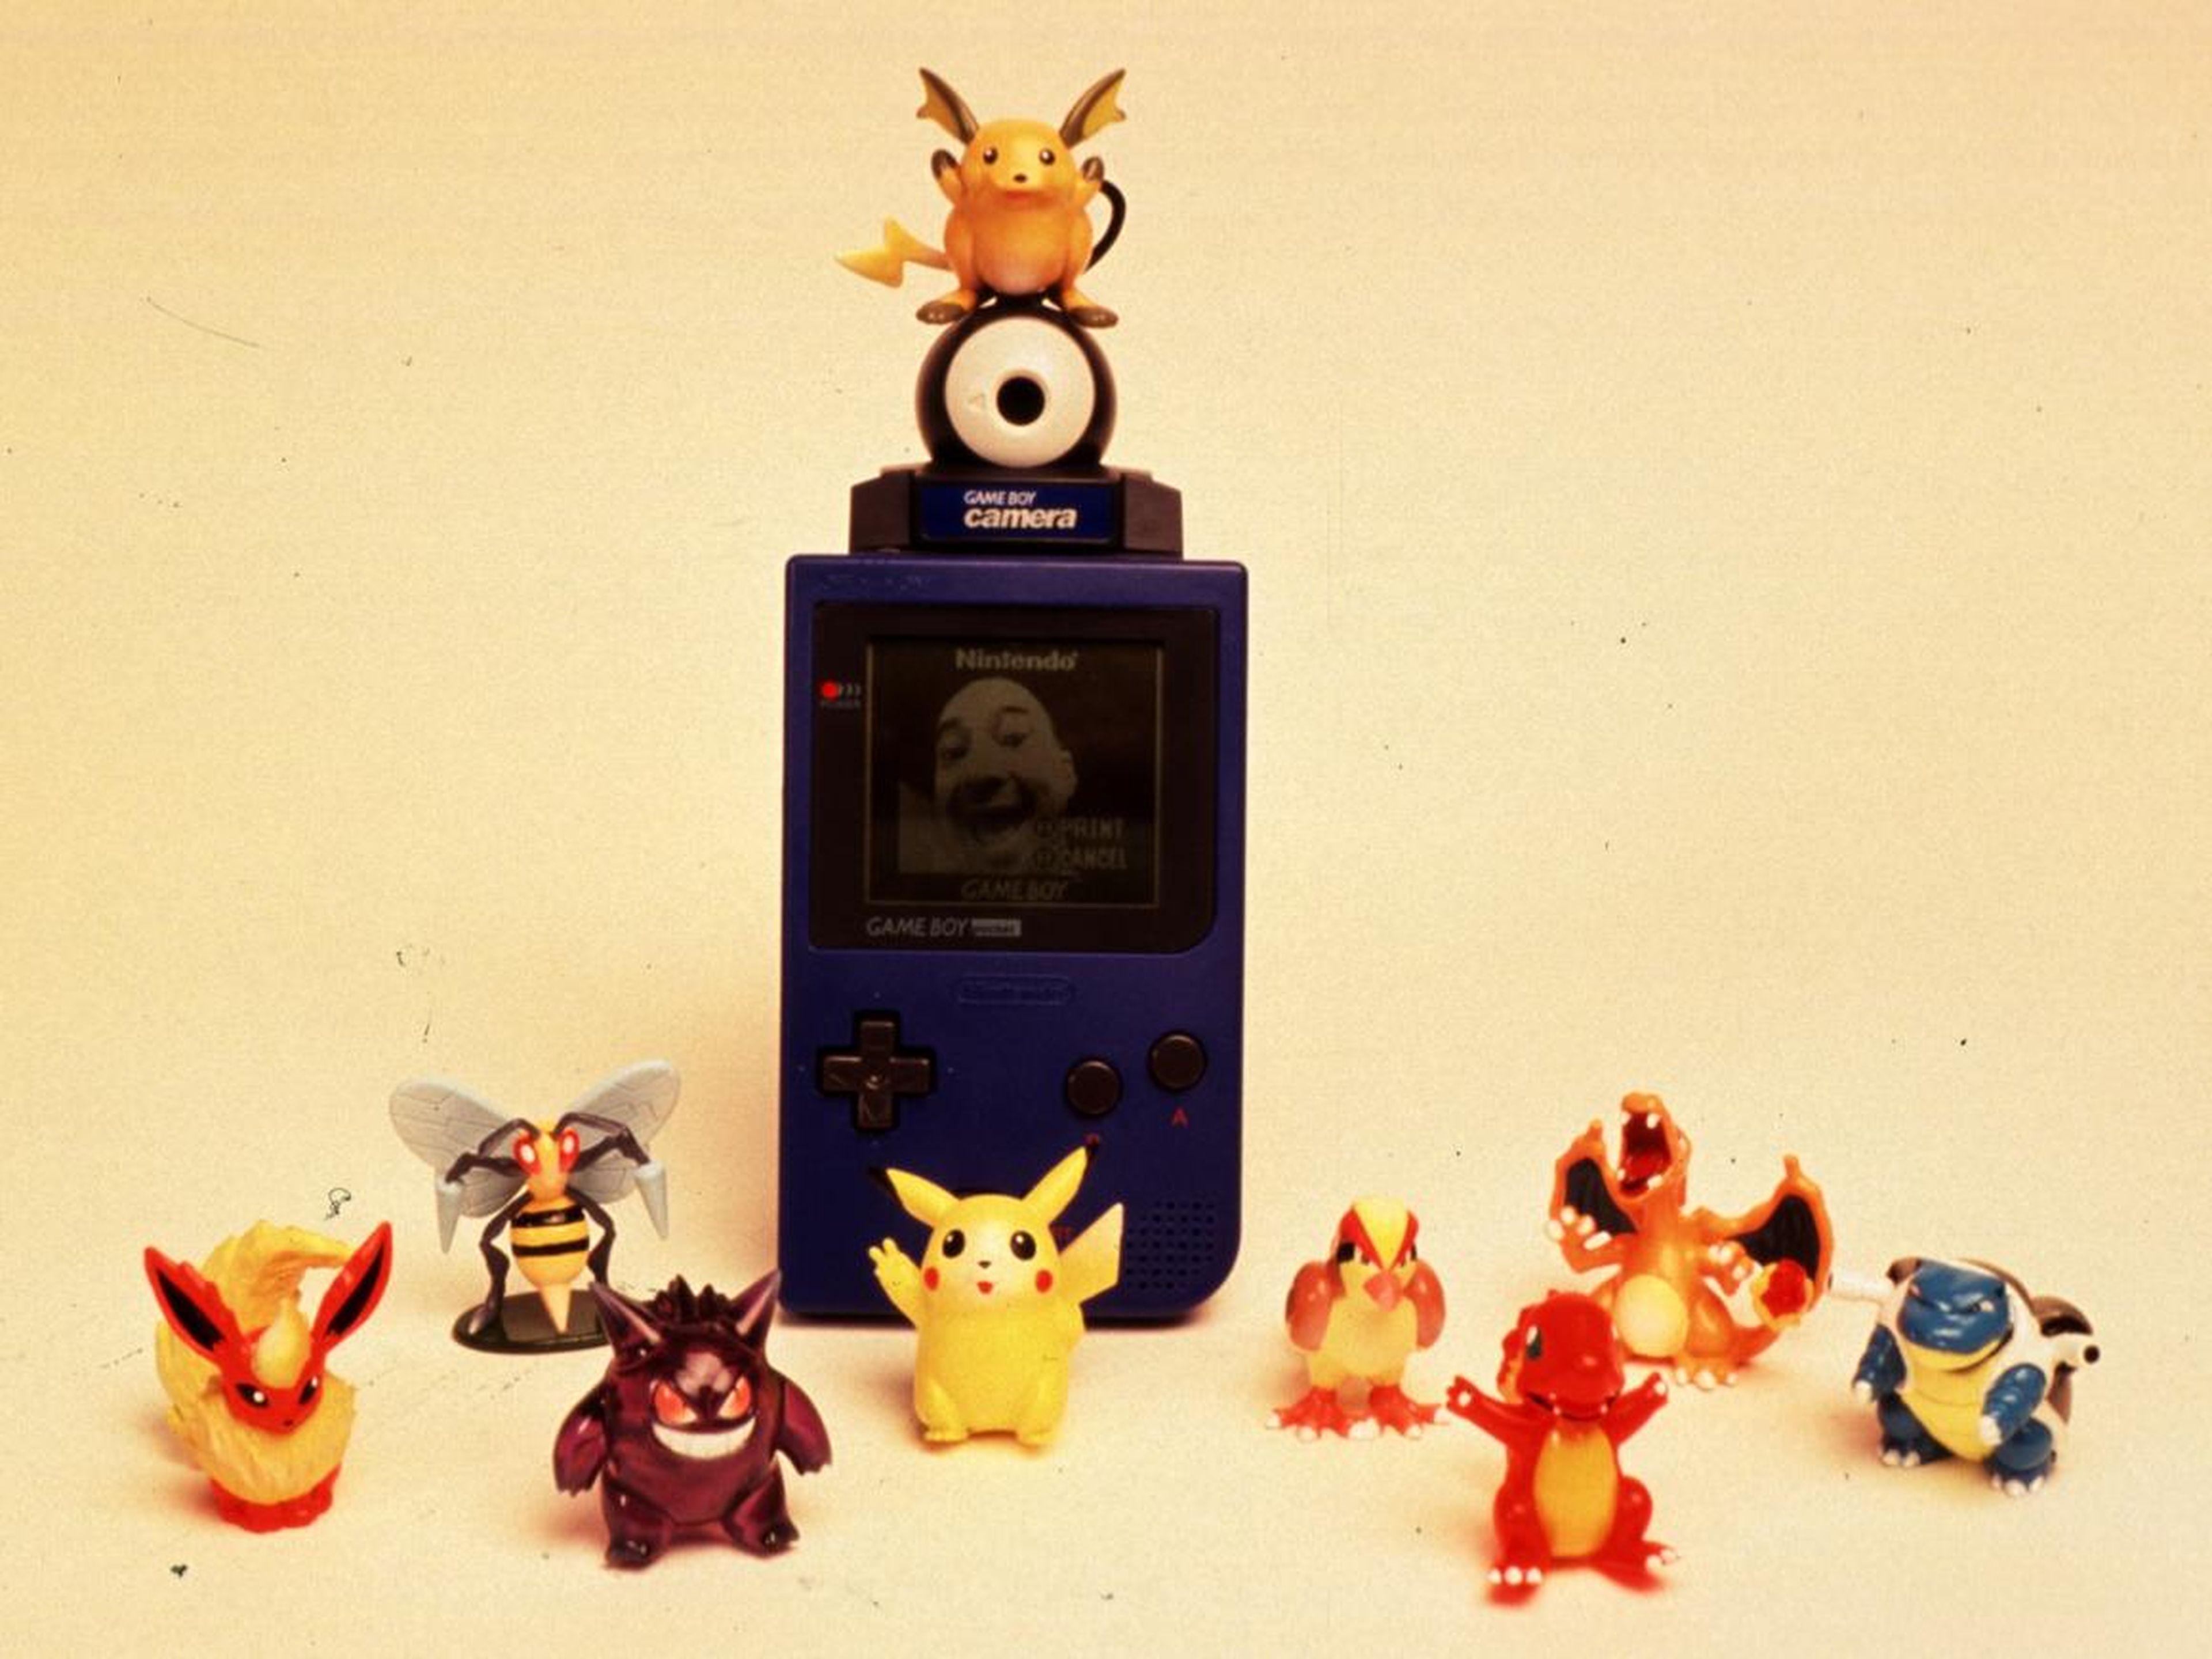 Nintendo Game Boy Camera & Pokemon action figures